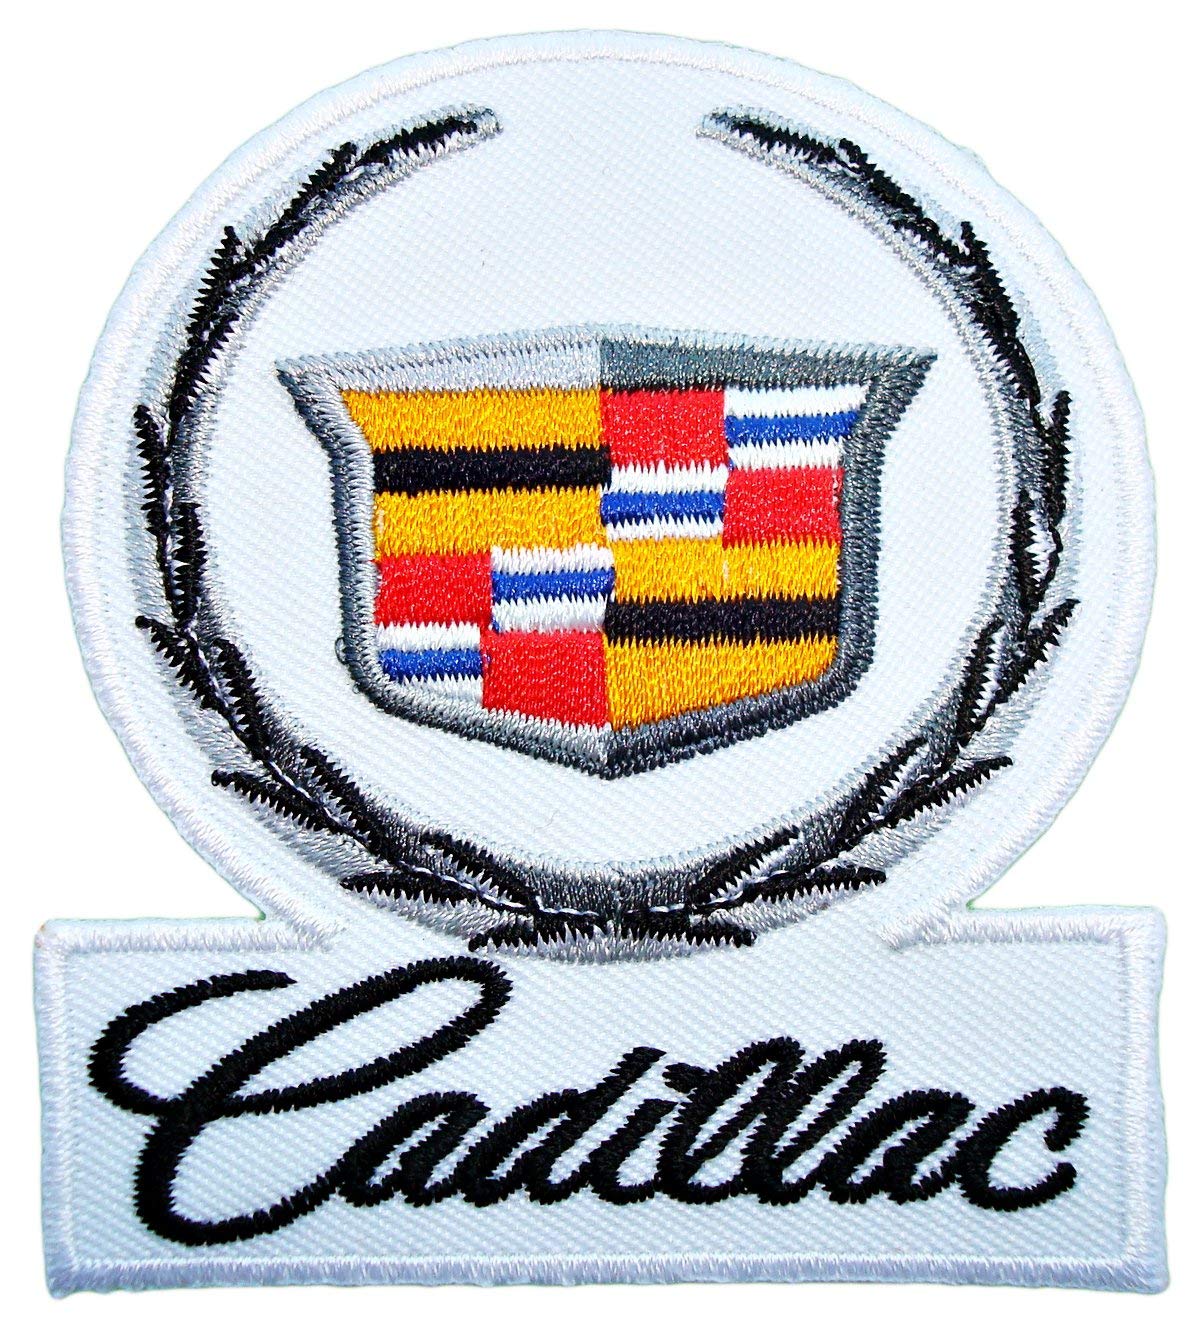 Escalade Logo - CADILLAC Cts escalade Sts Srx Cars Logo Shirt Embroidered Patch 2.75 ...